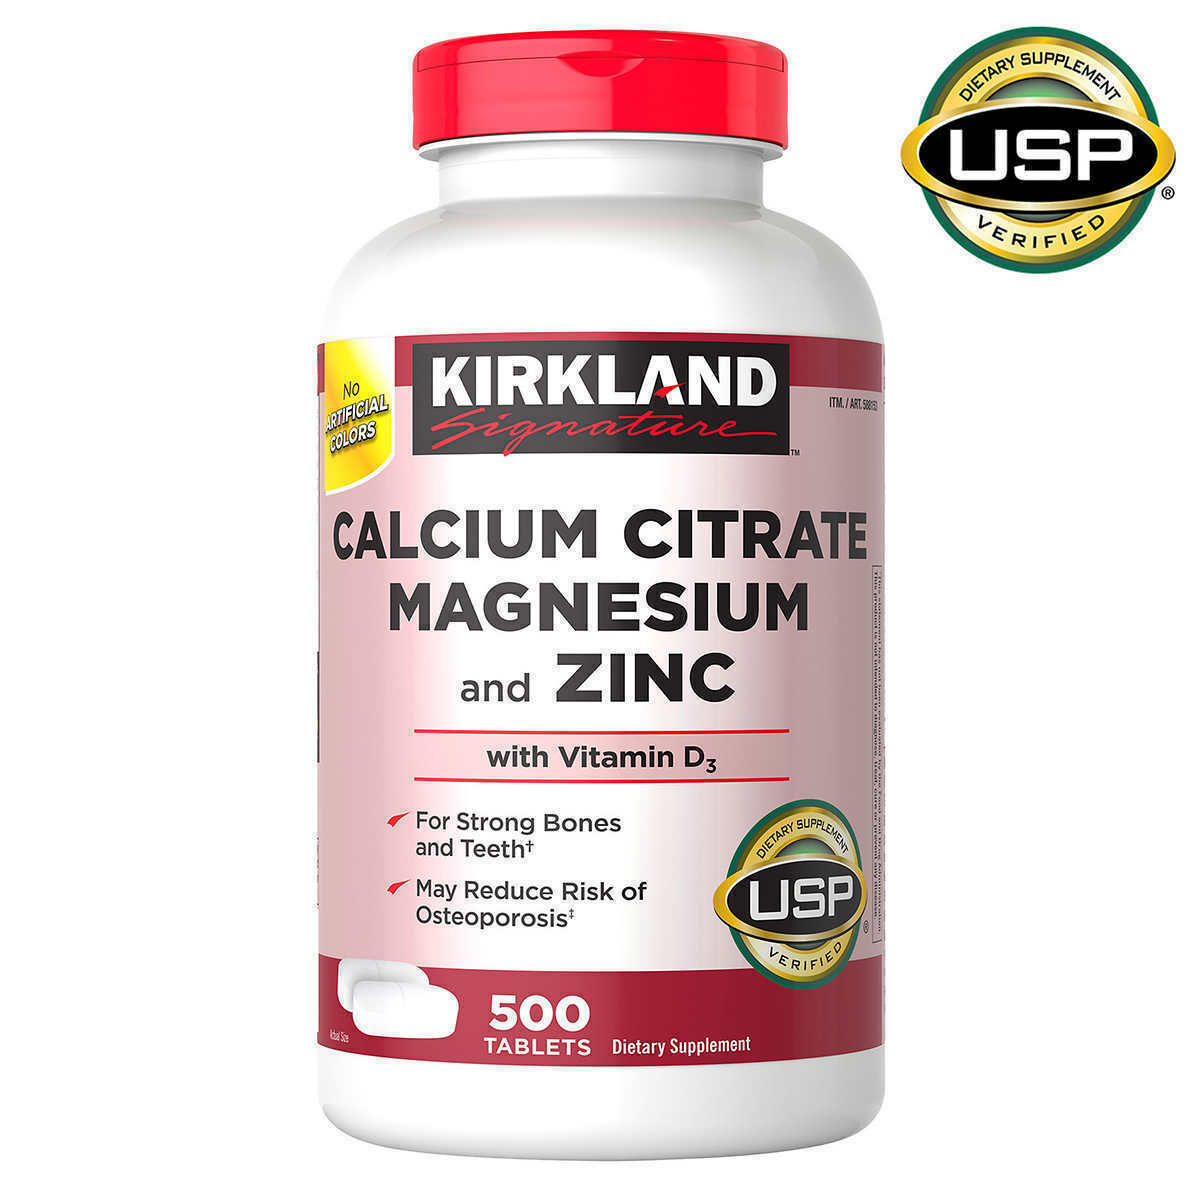 NEW Kirkland Signature Calcium Citrate Magnesium and Zinc, 500 Tablets FREE SHIP